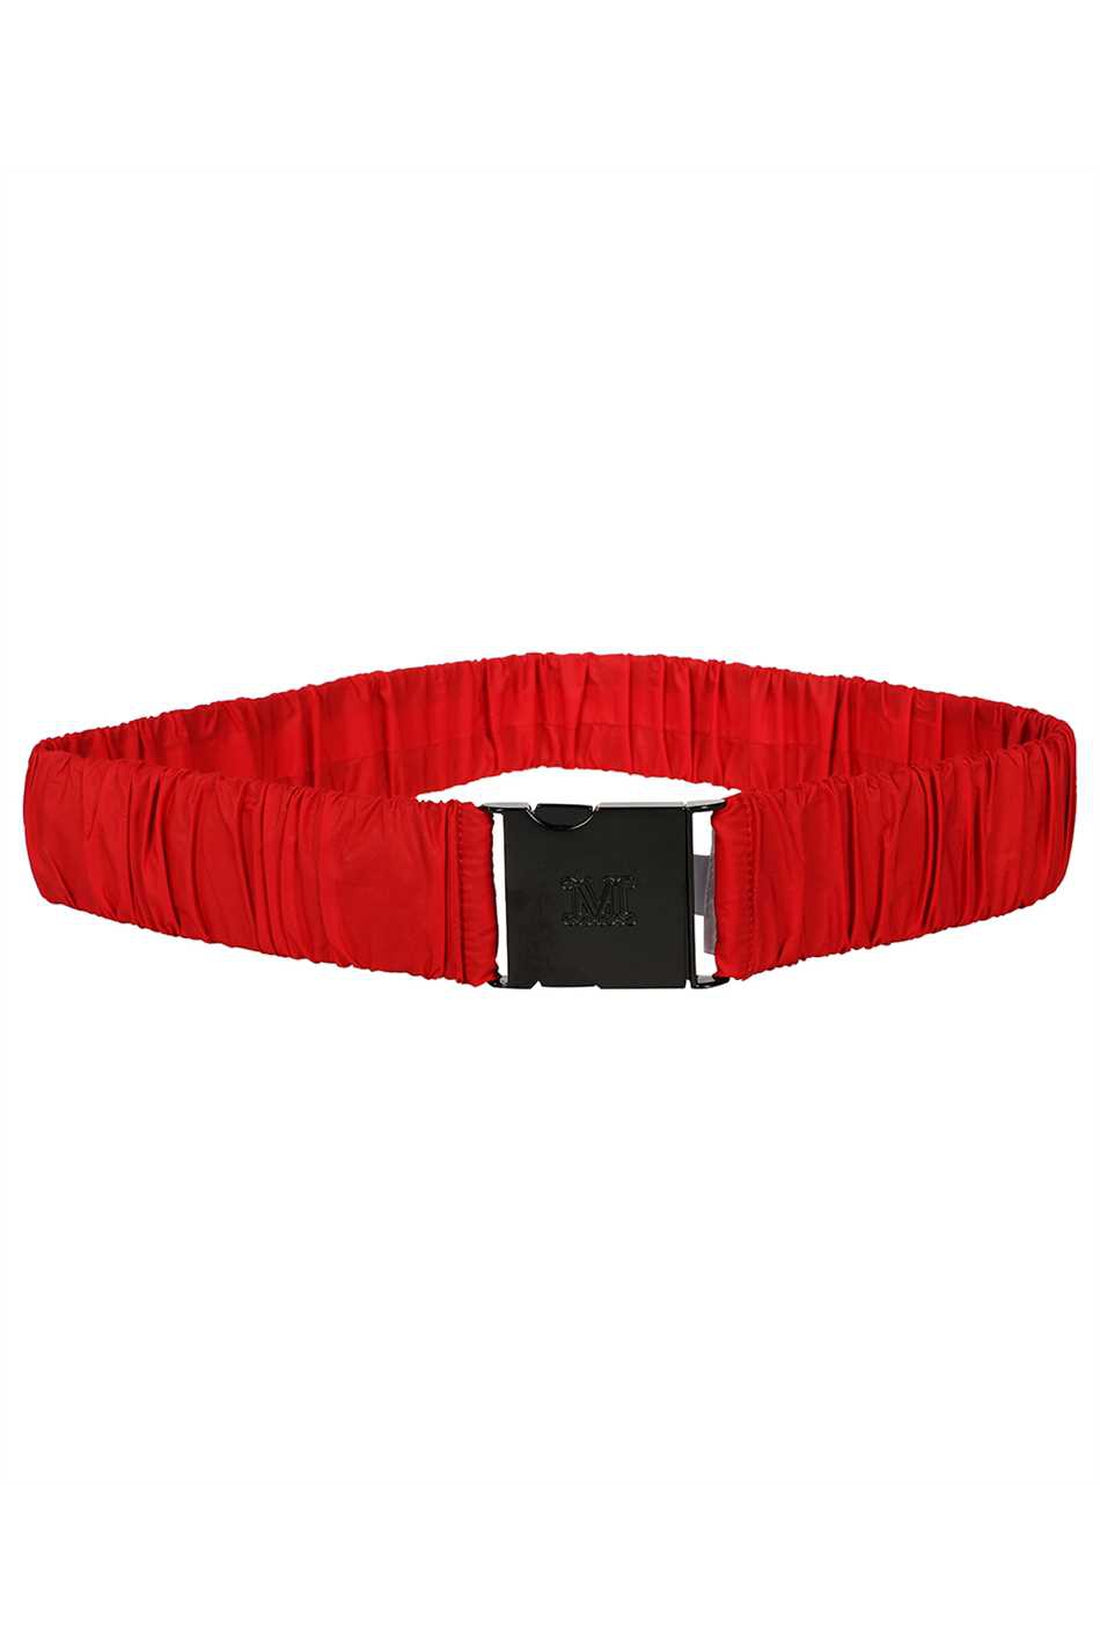 Max Mara-OUTLET-SALE-Show elastic belt with logo detail-ARCHIVIST